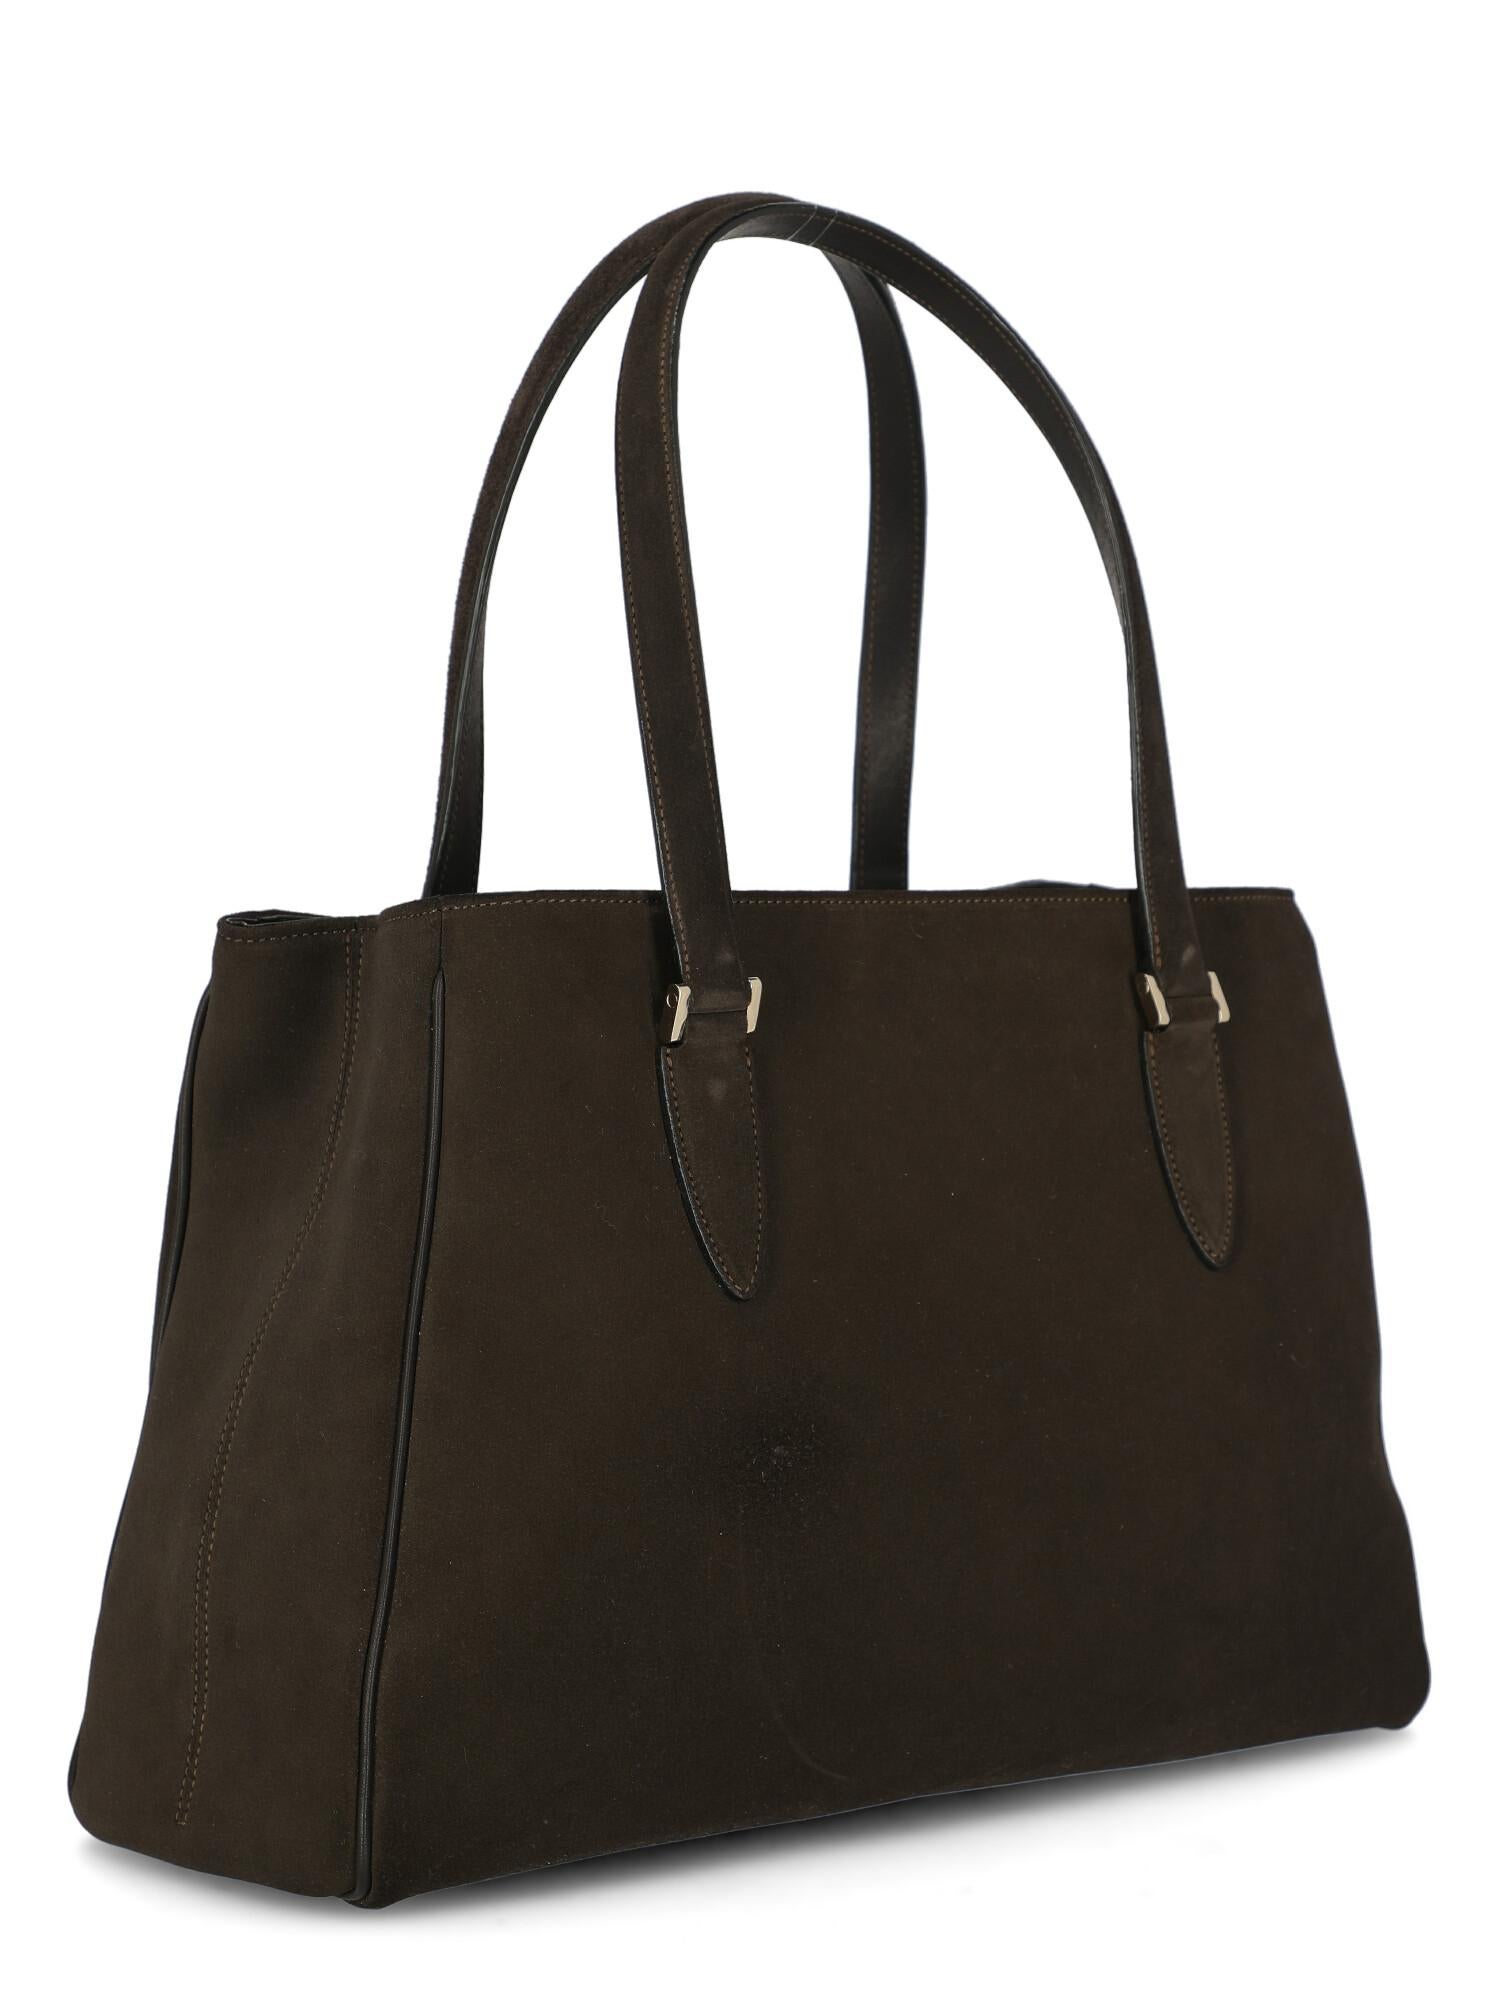 Black Valextra Woman Handbag  Brown Leather For Sale